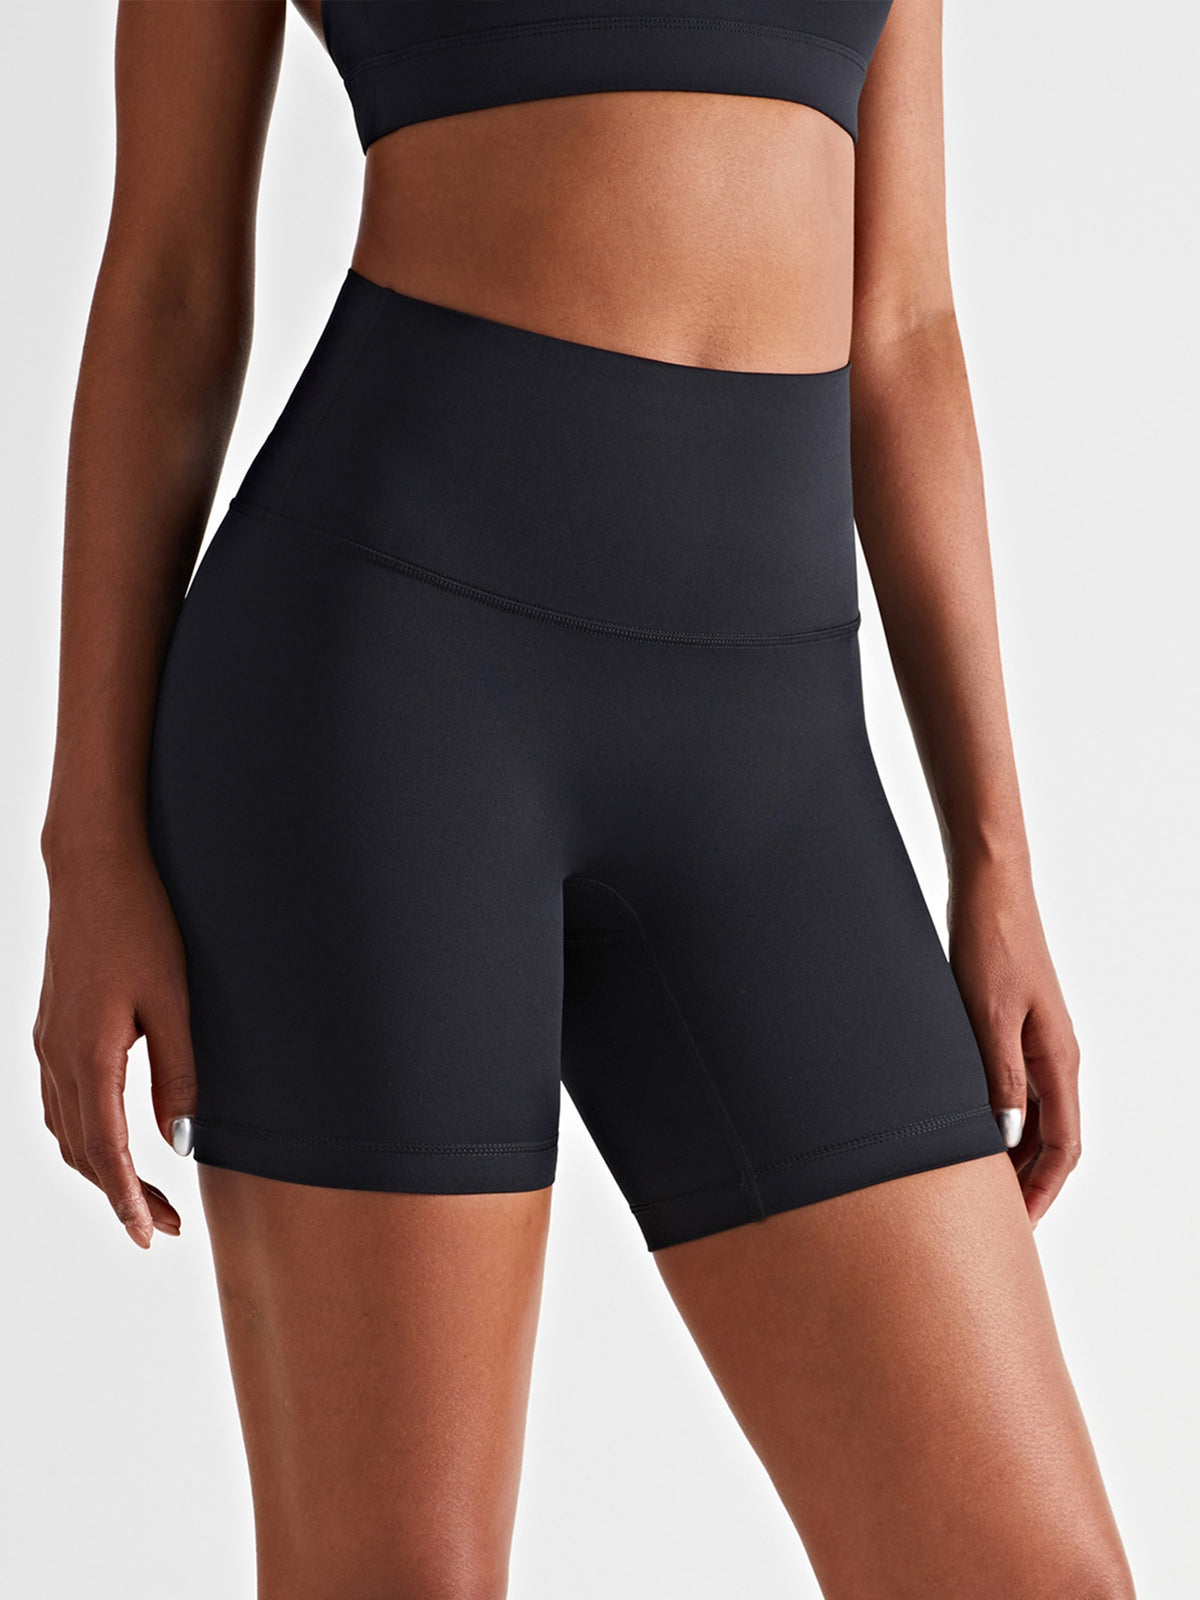 Women's thin tight high waist fitness pants women's beautiful buttocks yoga pants one-third fitness peach buttocks sports shorts